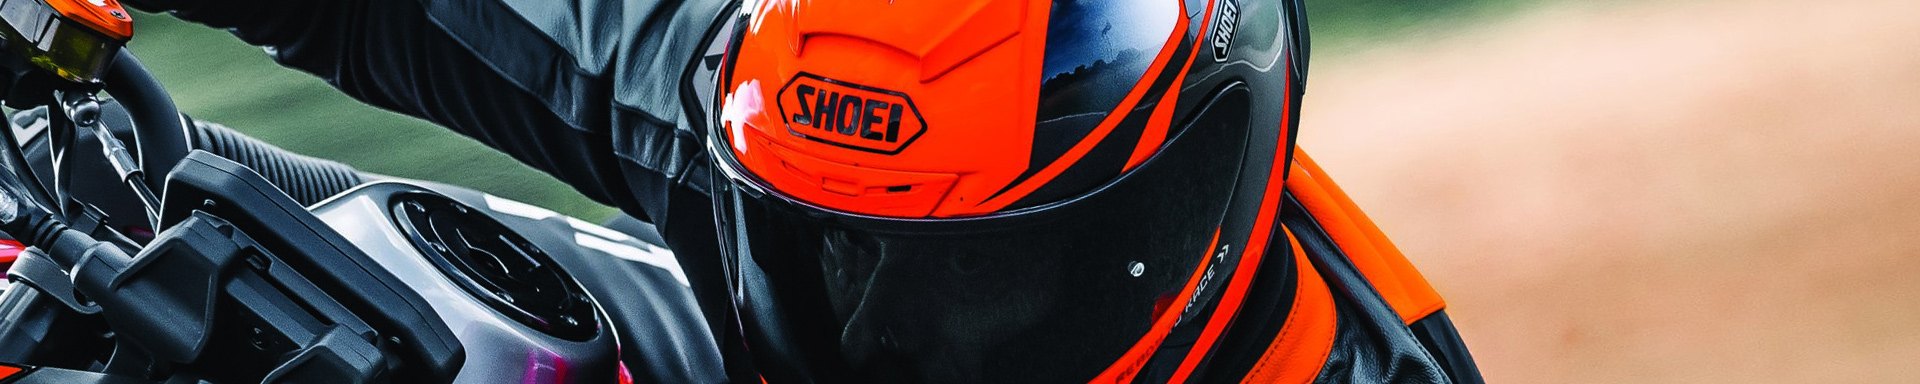 Motorcycle Full Face Helmets